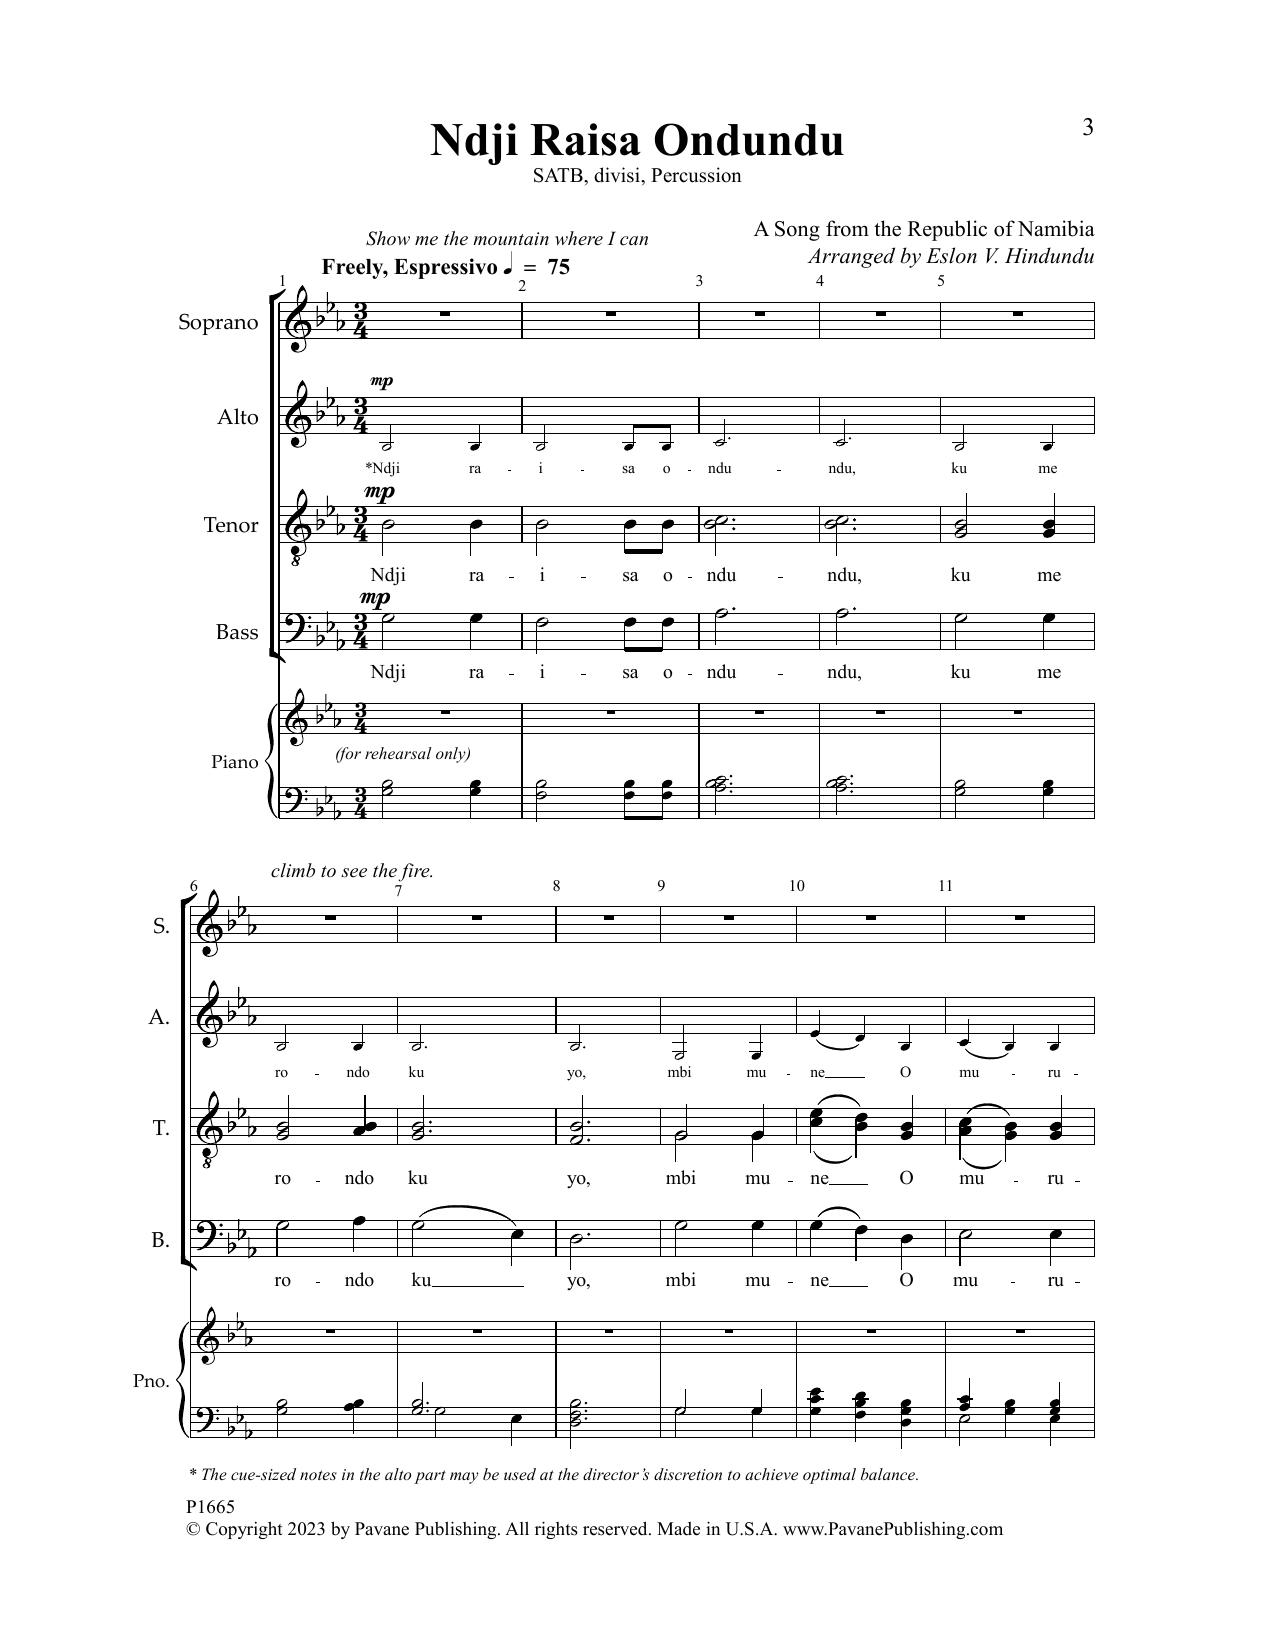 Download Eslon V. Hindundu Ndji Raisa Ondundu Sheet Music and learn how to play SATB Choir PDF digital score in minutes